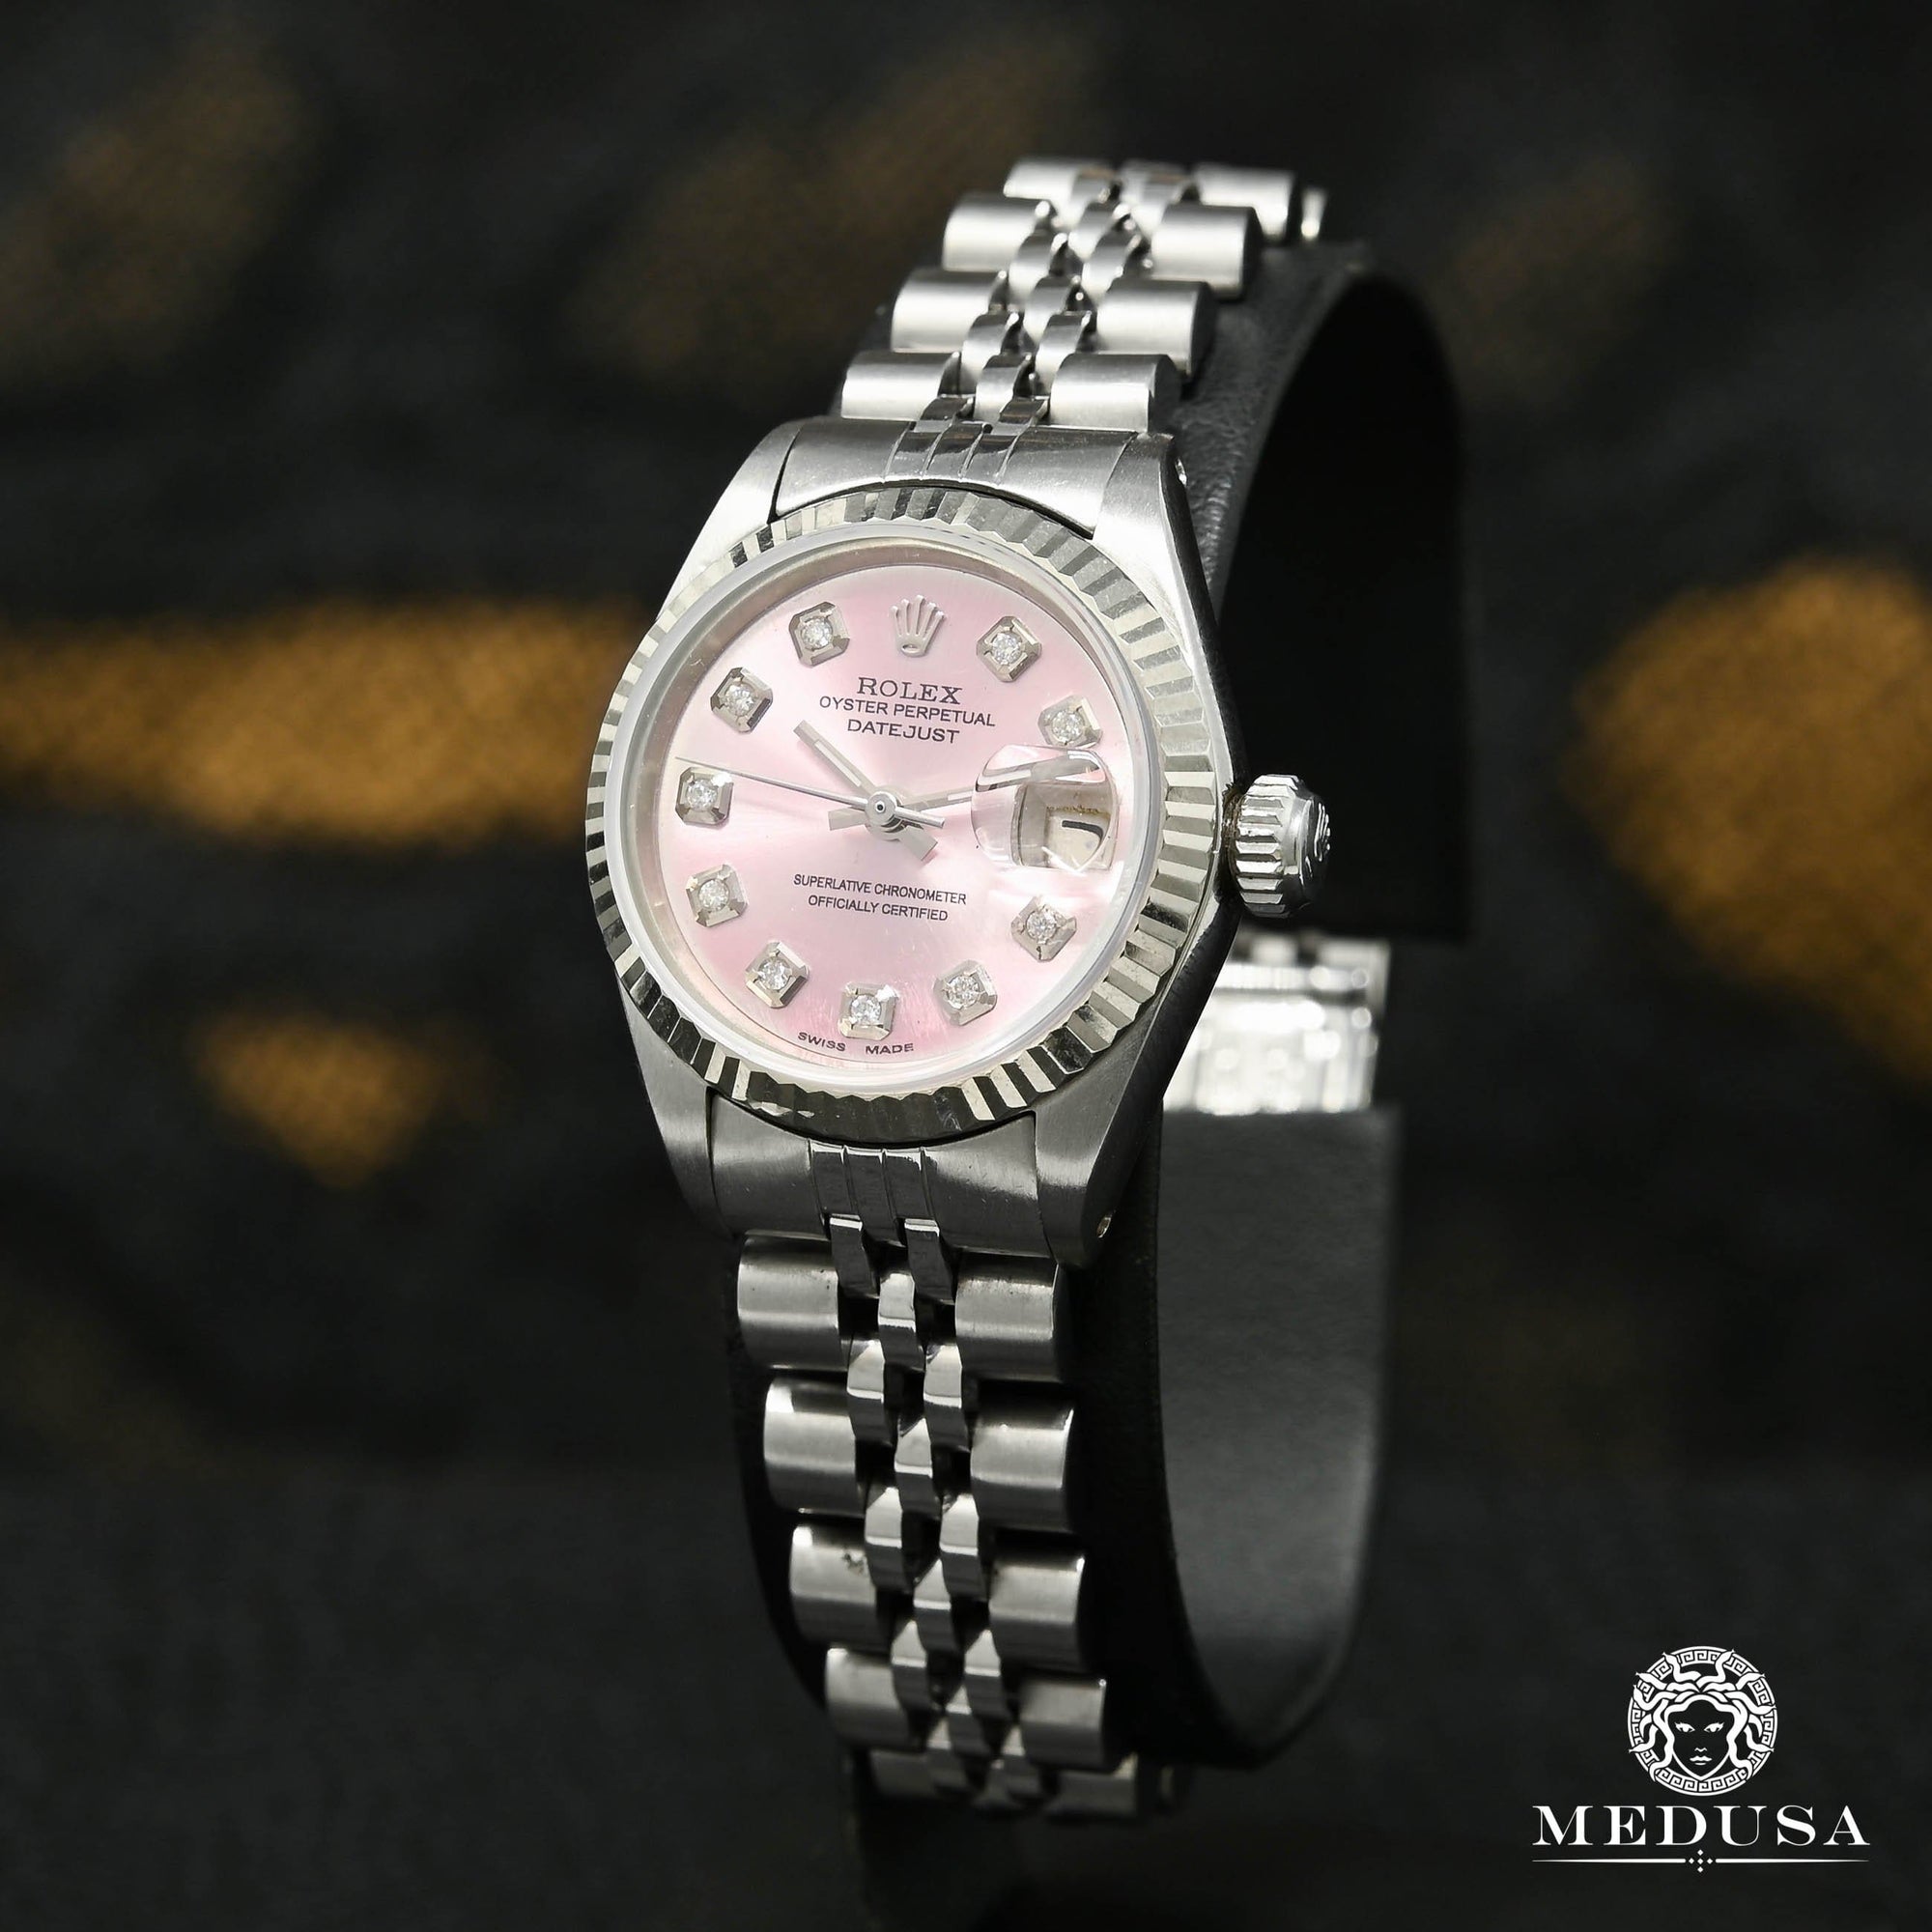 Rolex watch | Rolex Datejust 26mm Women's Watch - Pink Stainless Stainless